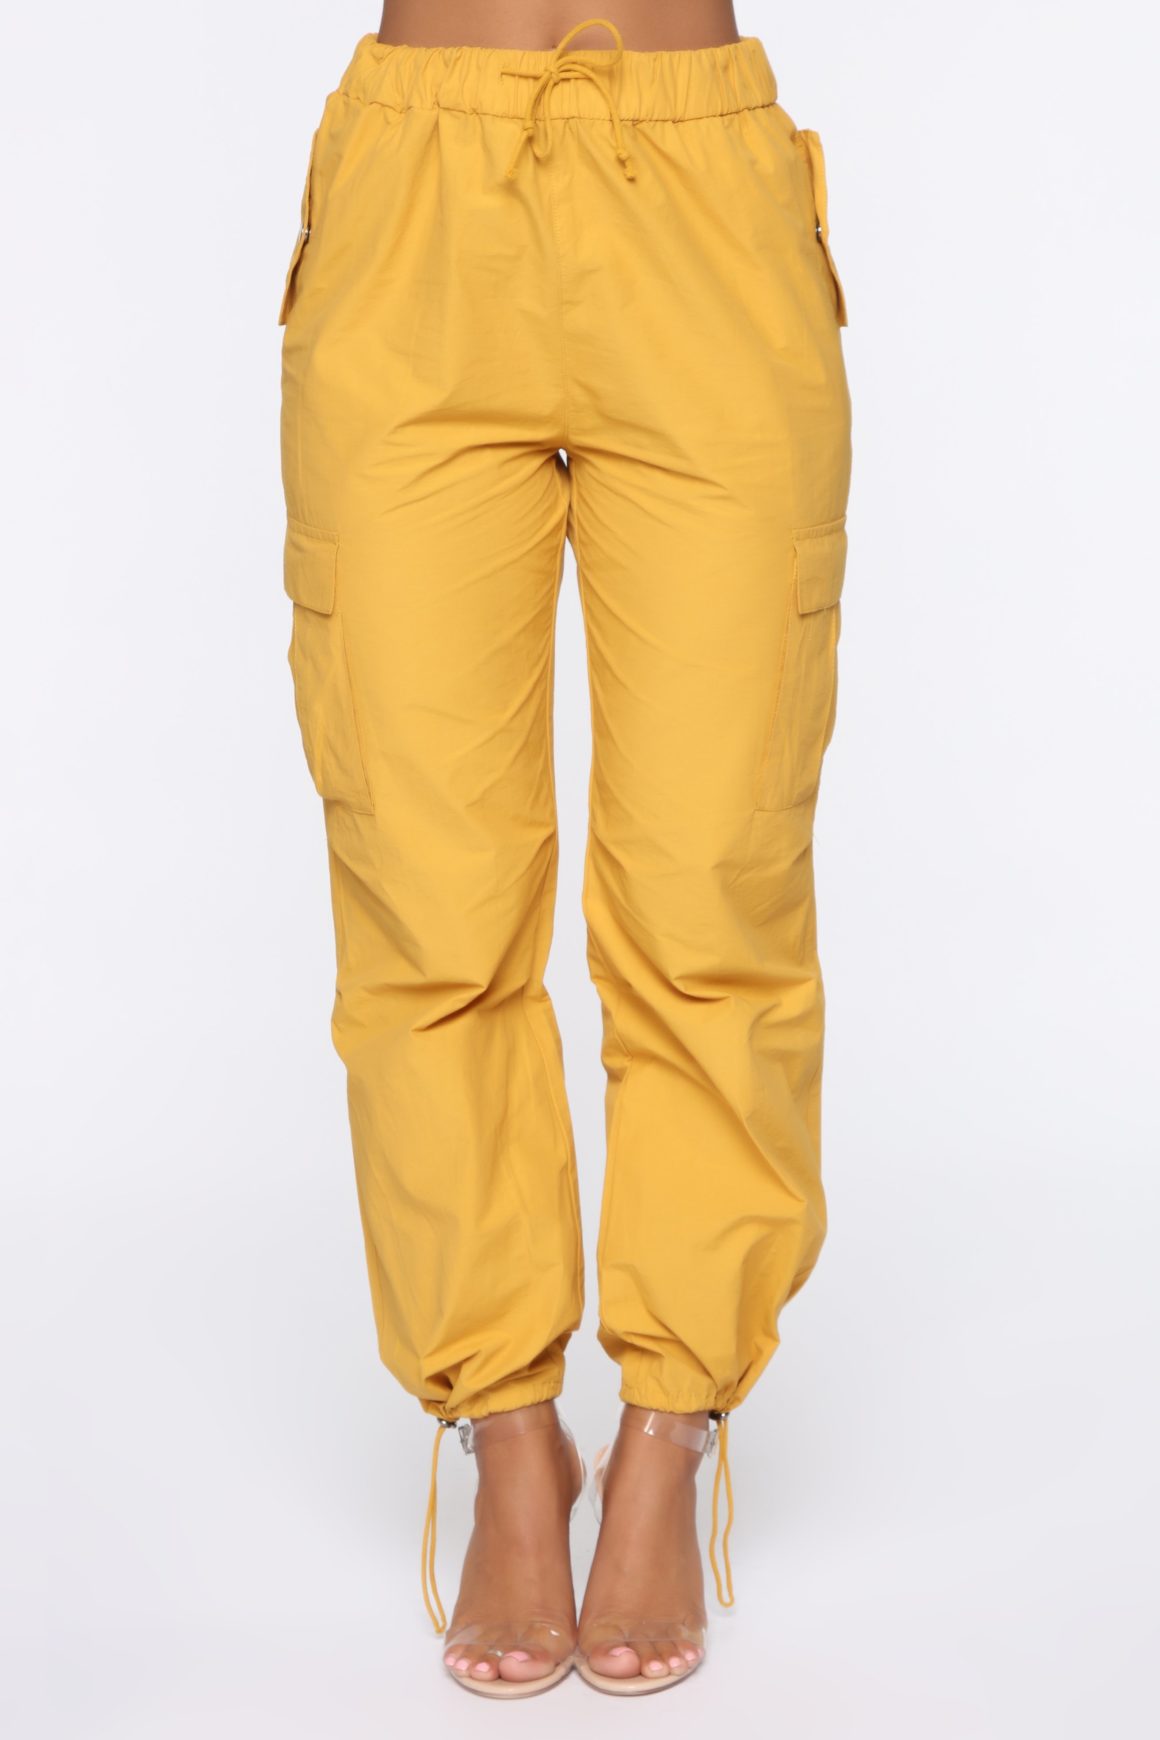 Jenny Lin Keeps Her Street Style Popping With Fashion Nova Cargo Pants ...